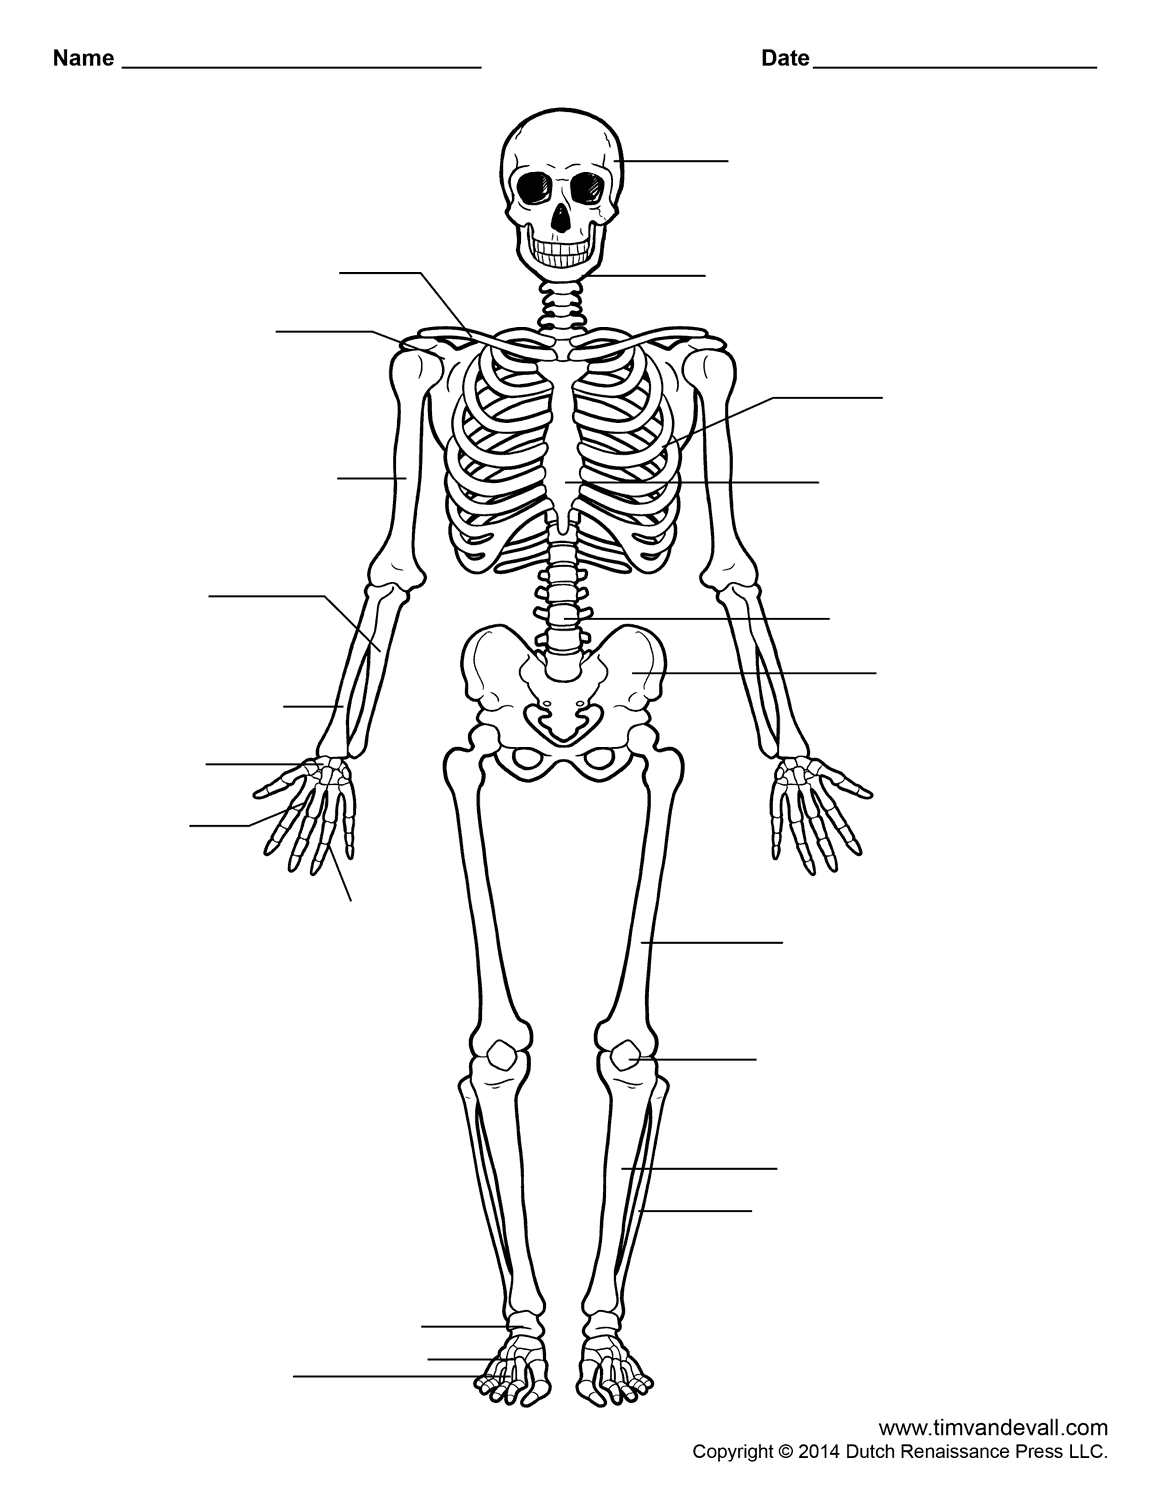 Free Printable Human Skeleton Worksheet For Students And Teachers - Printable Skeletal System Crossword Puzzle